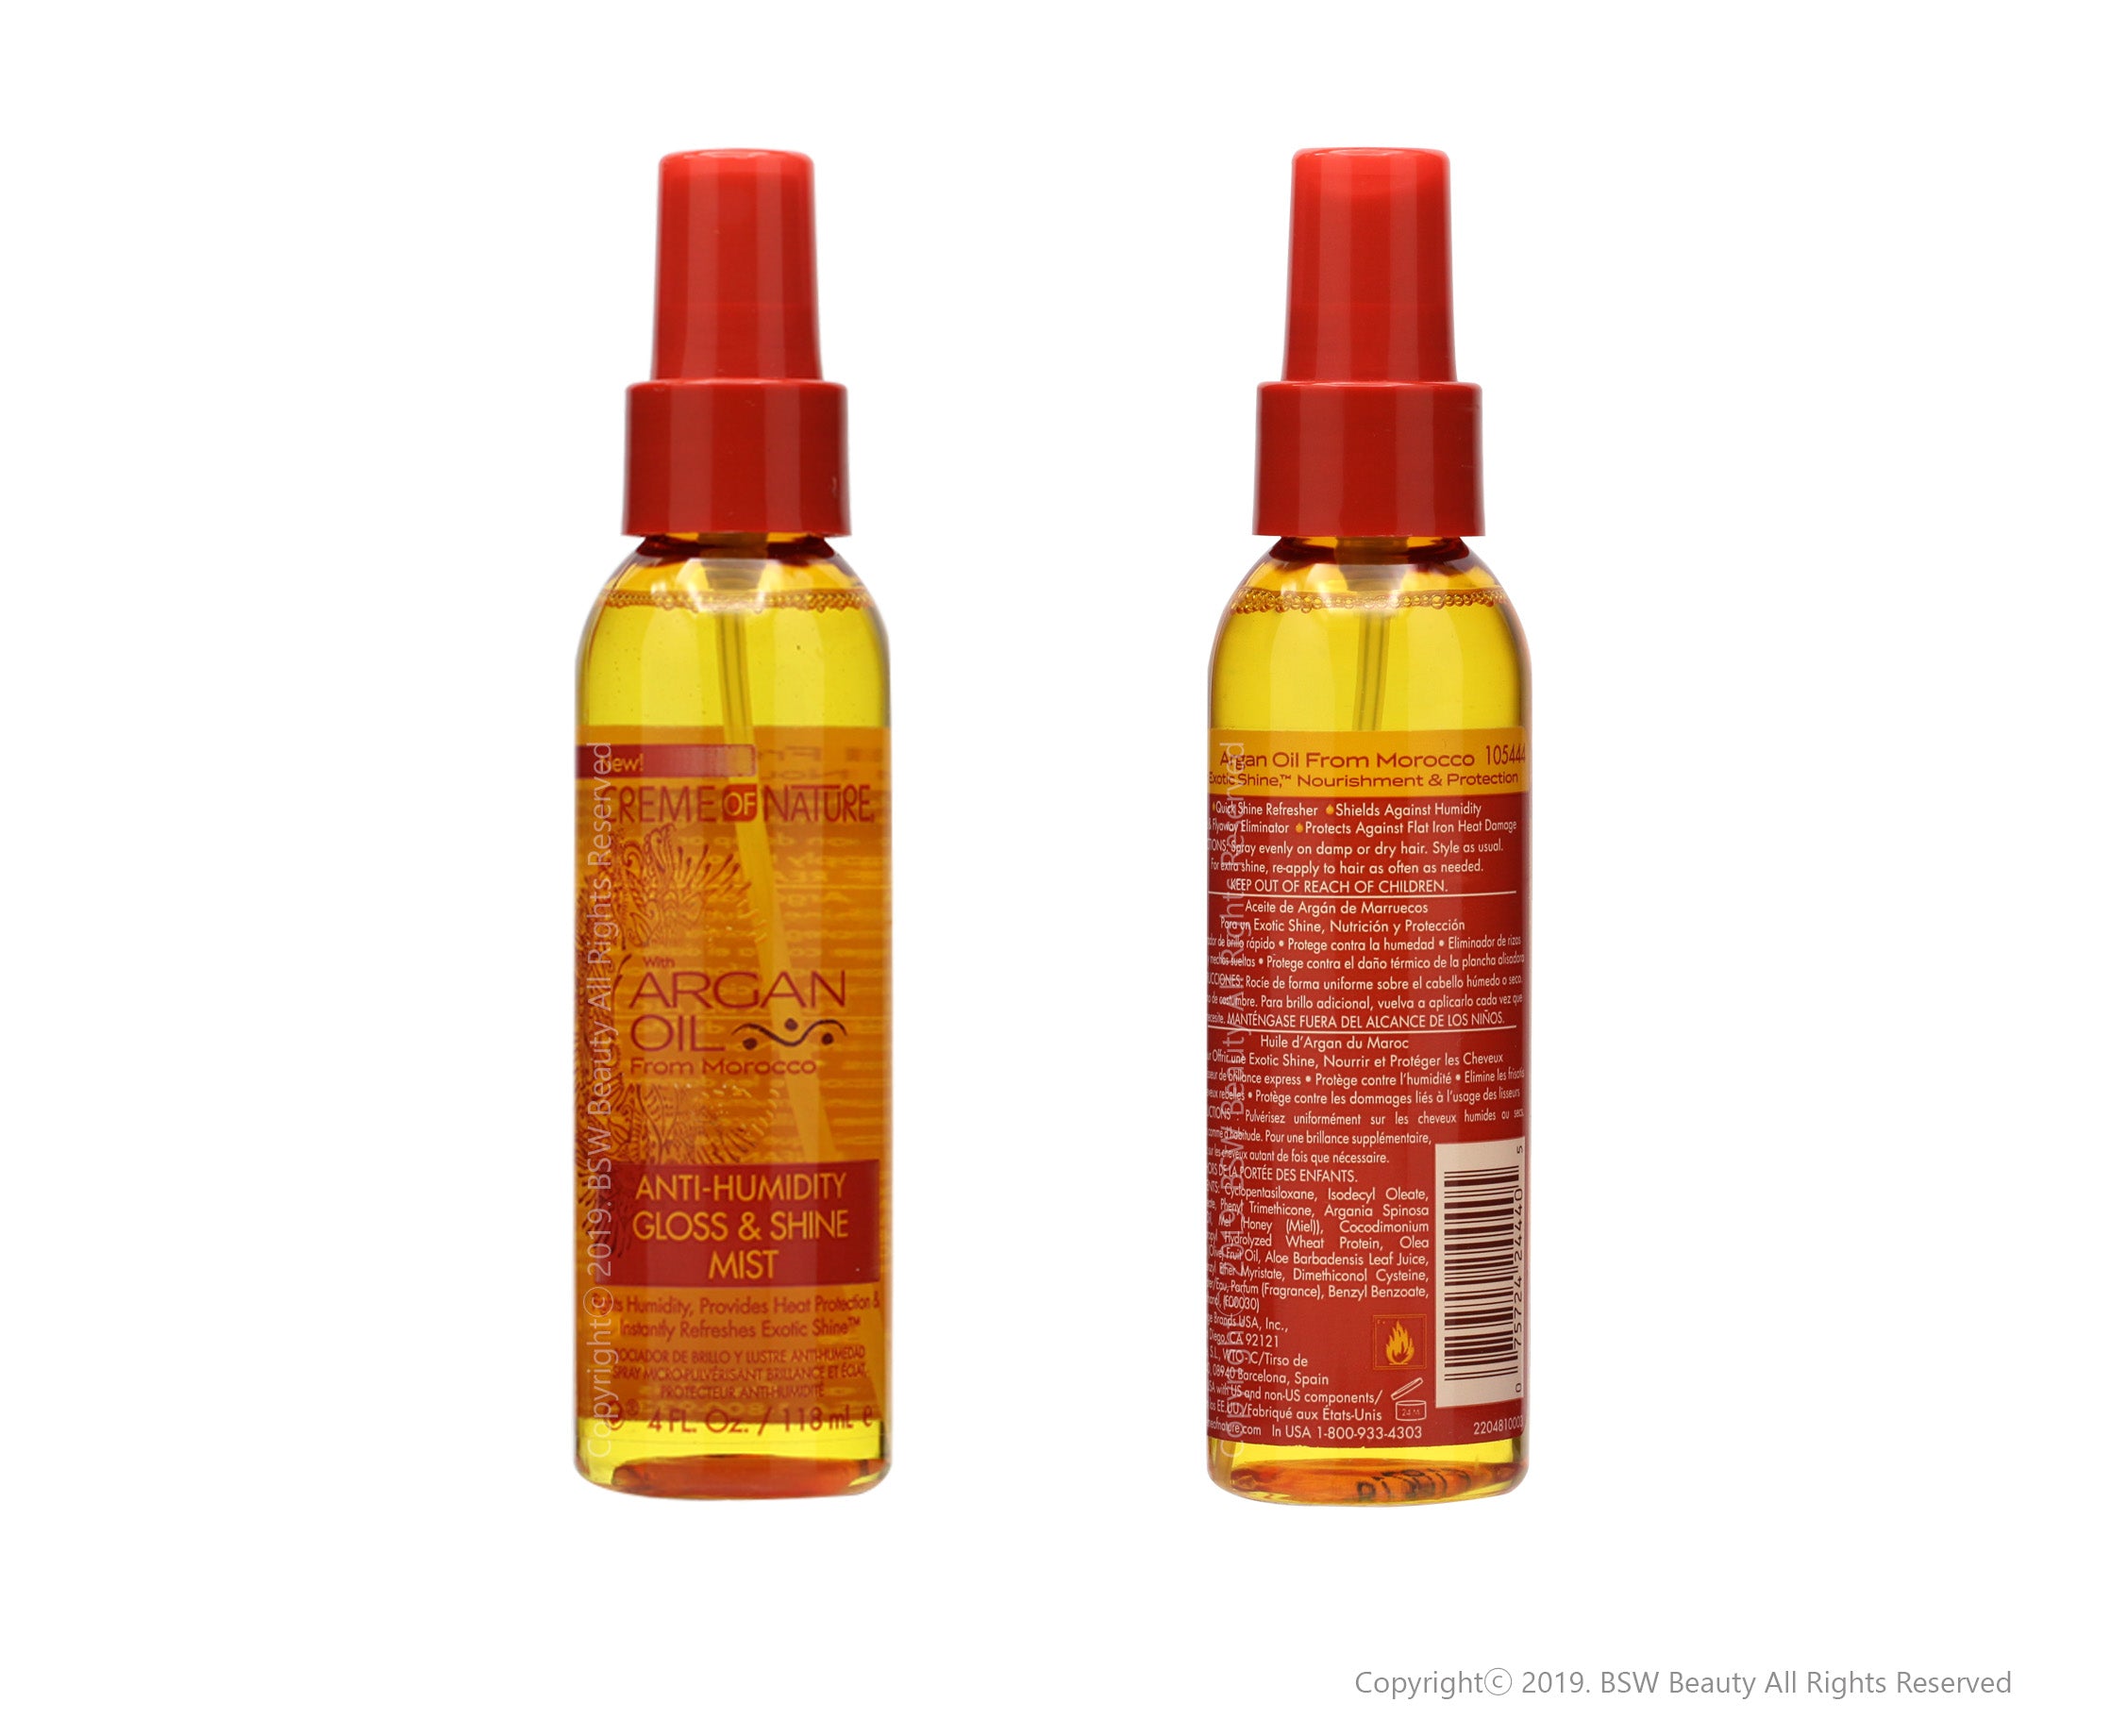 Anti-Humidity Gloss & Shine Mist - Creme of Nature®